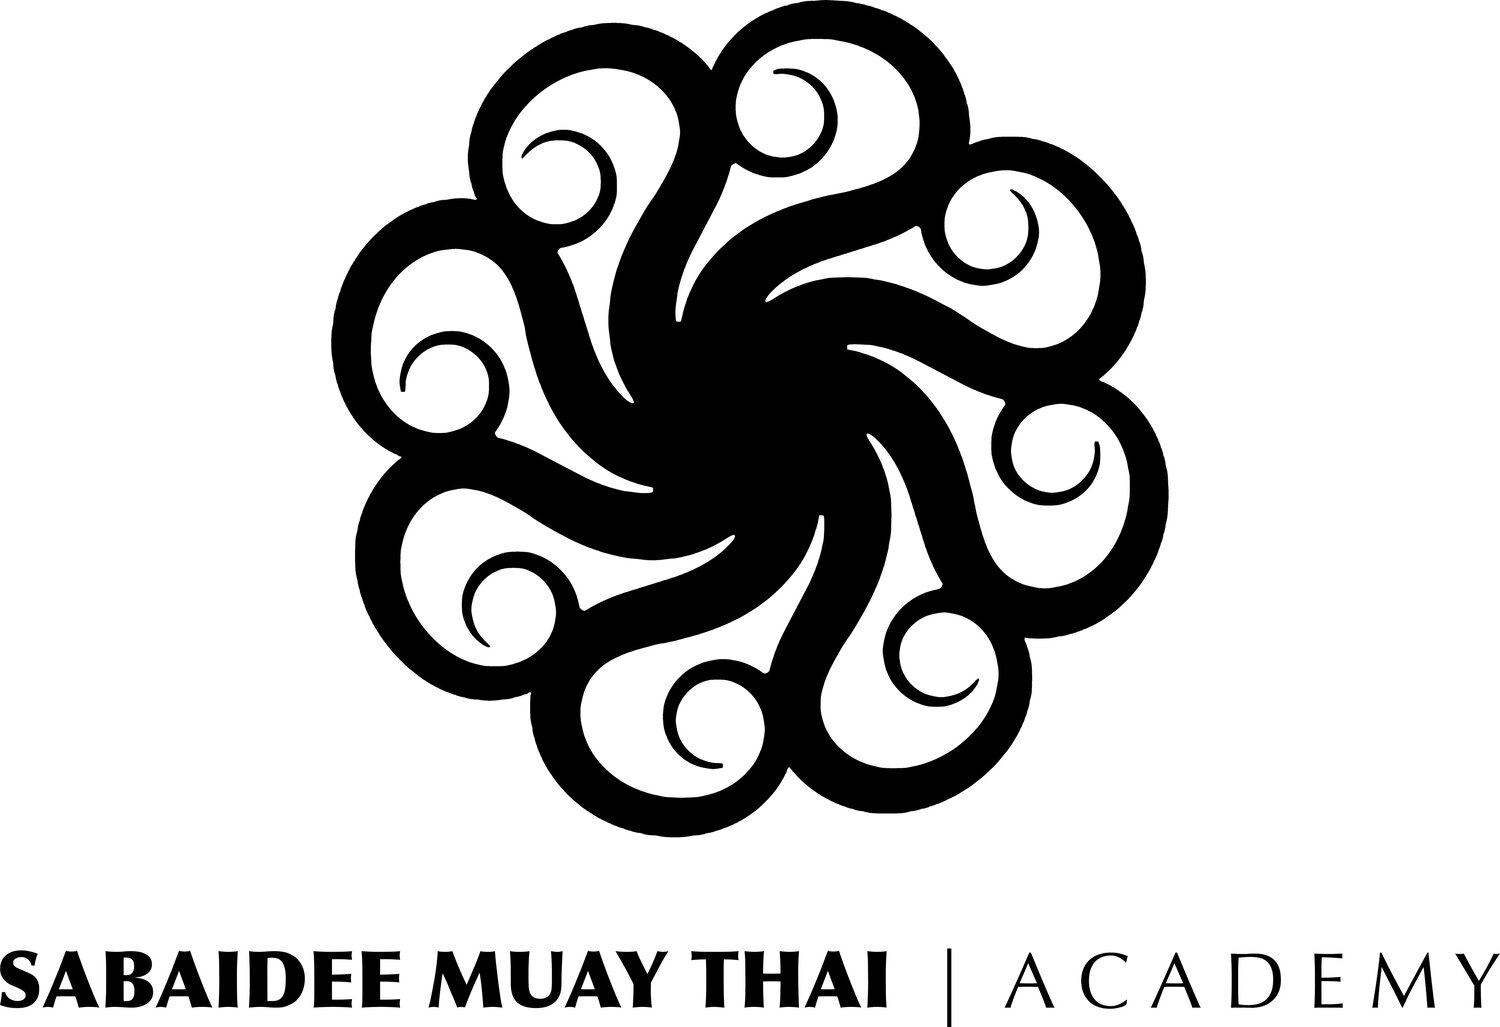 Sabaidee Muay Thai Academy